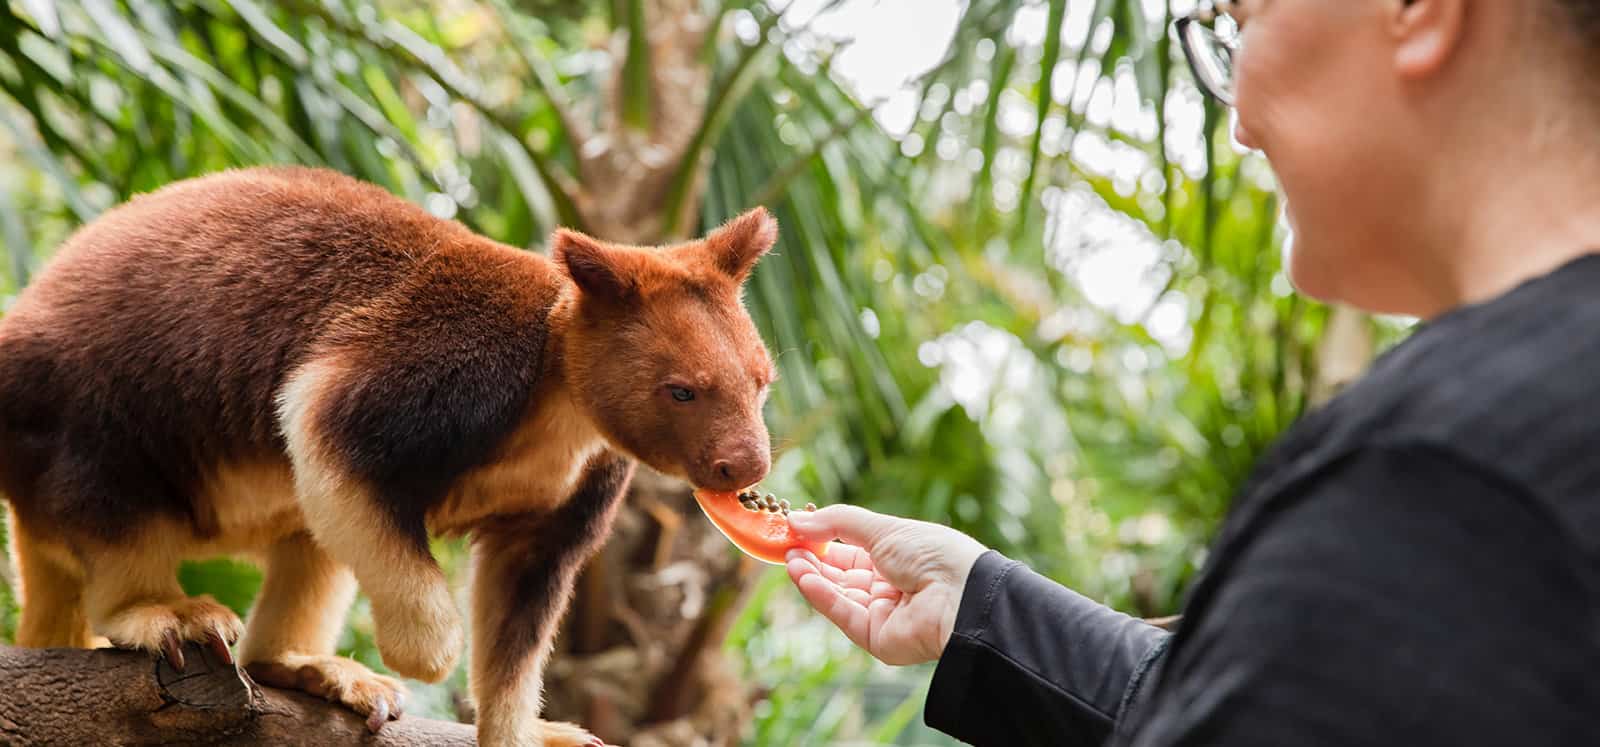 Tree Kangaroo being hand fed during encounter at Adelaide Zoo